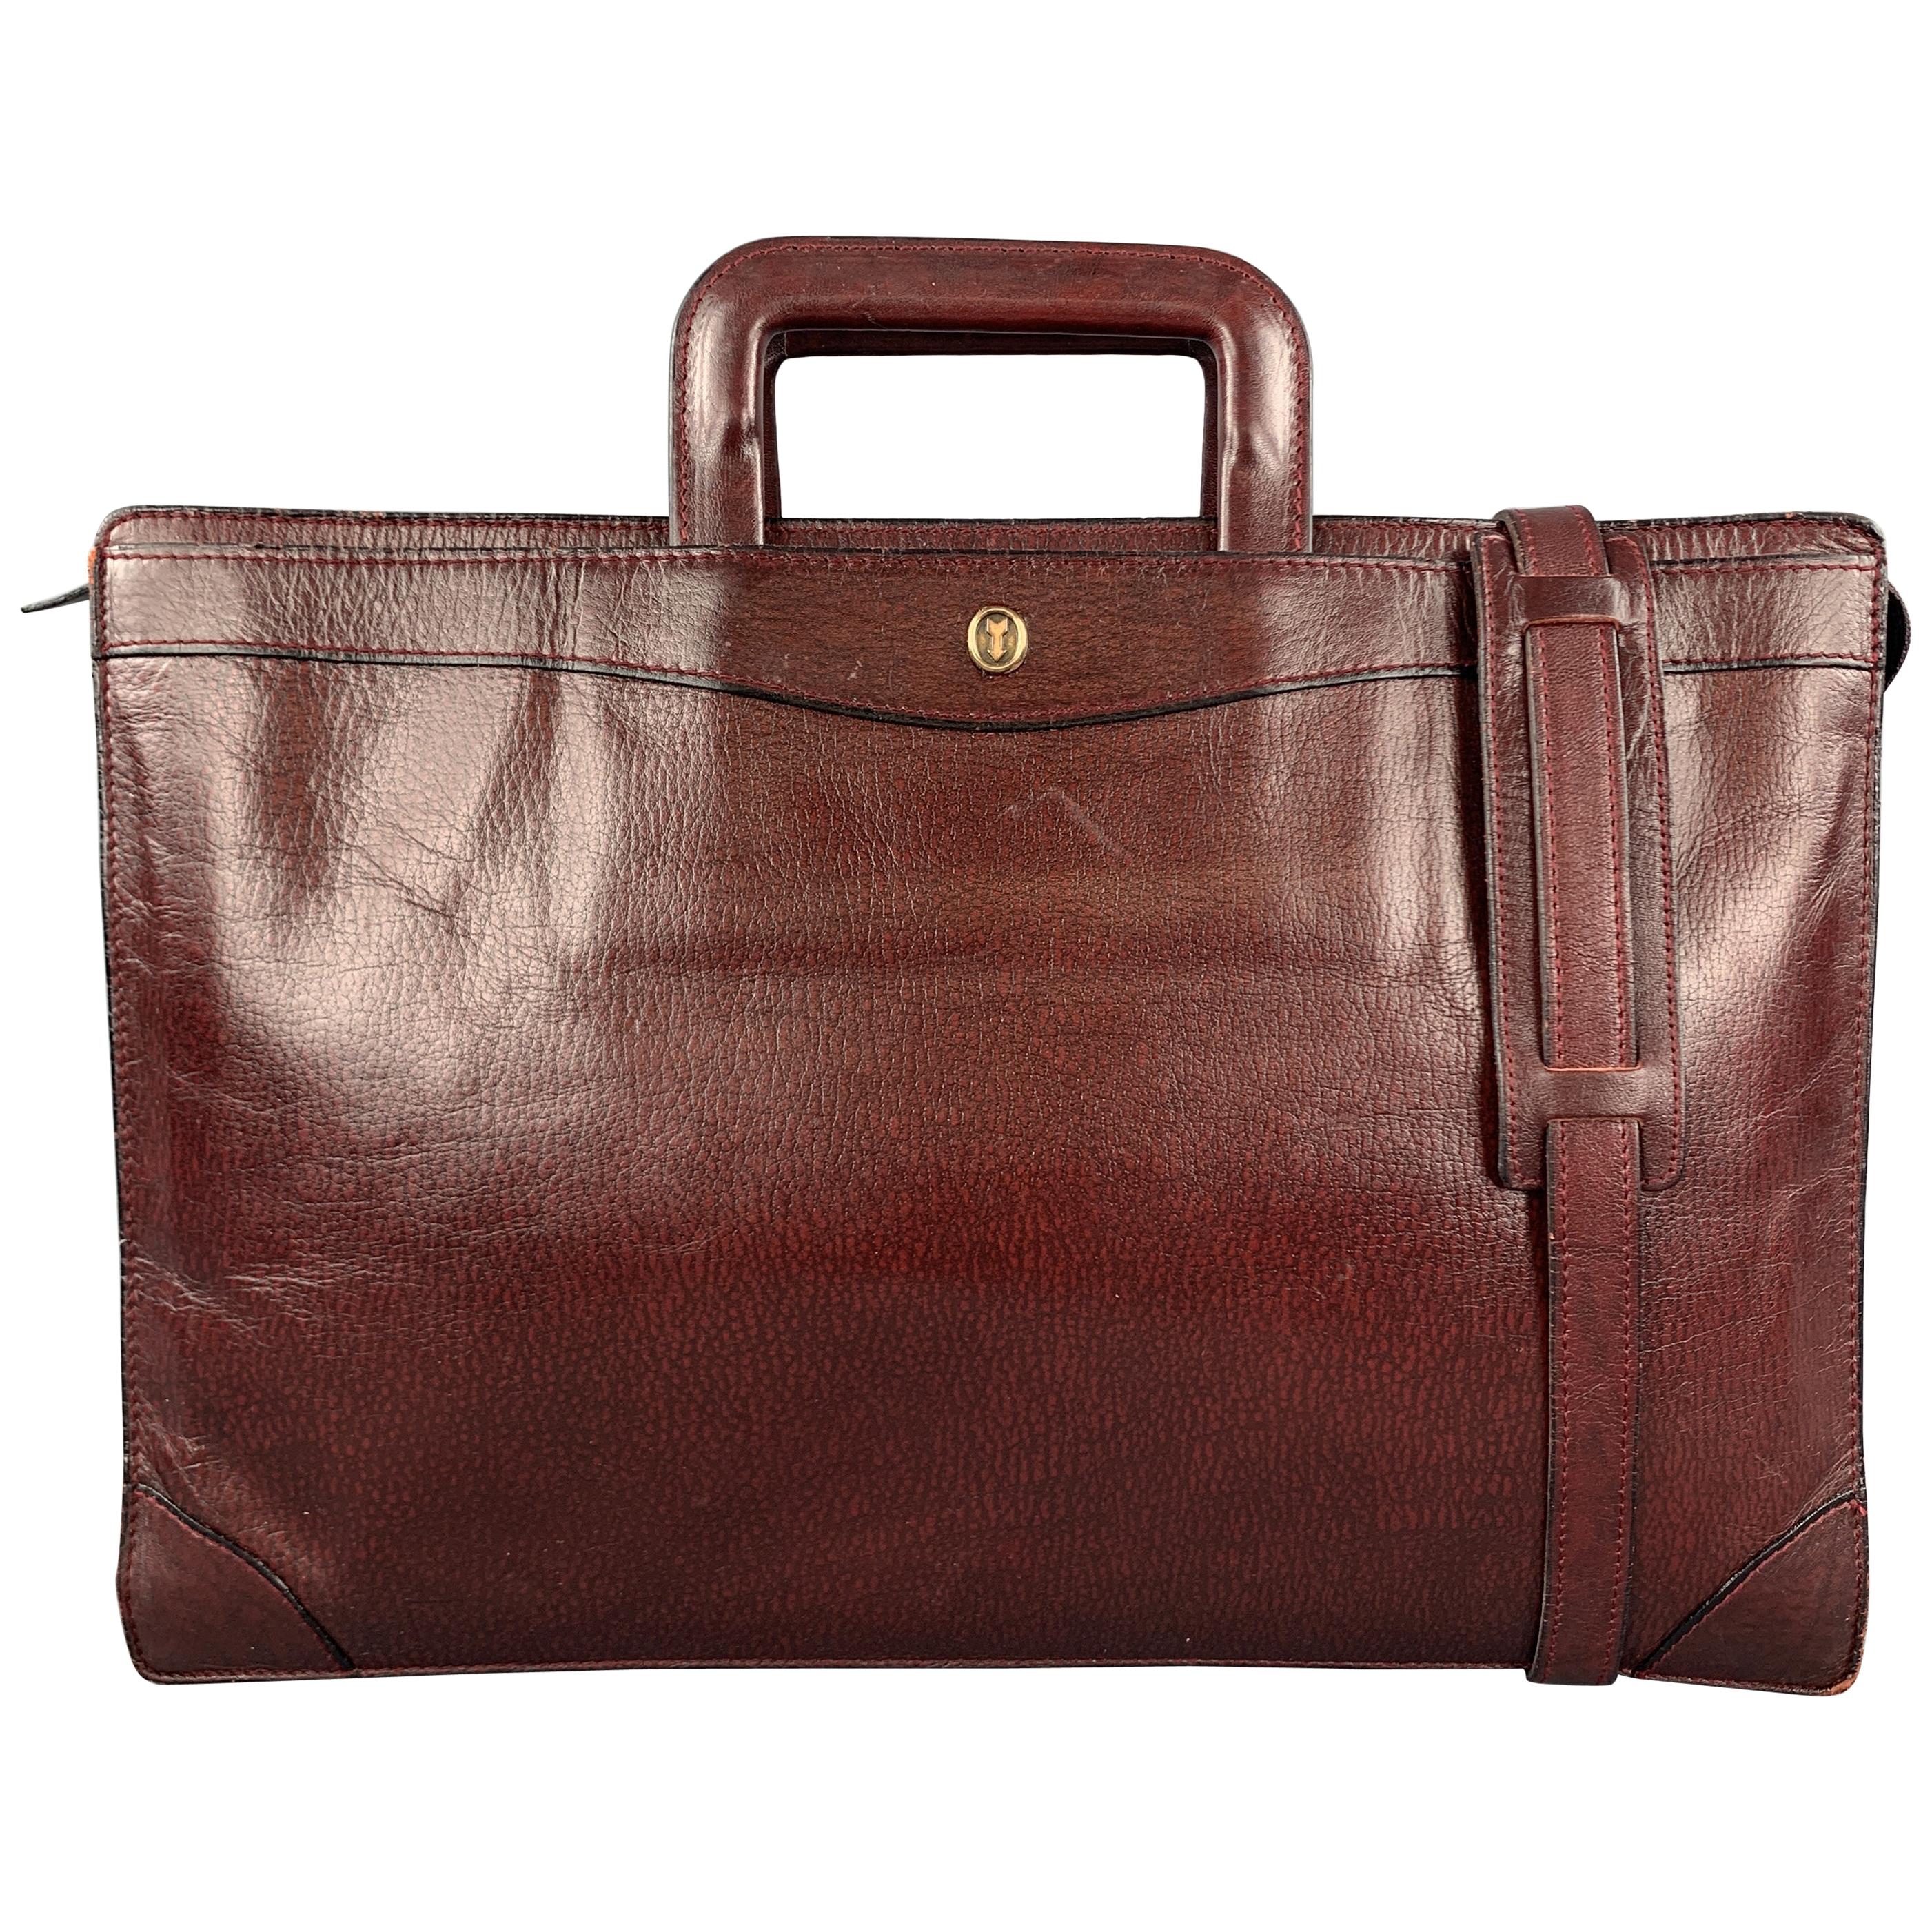 GOLDPFEIL Burgundy Leather Shoulder Strap Briefcase